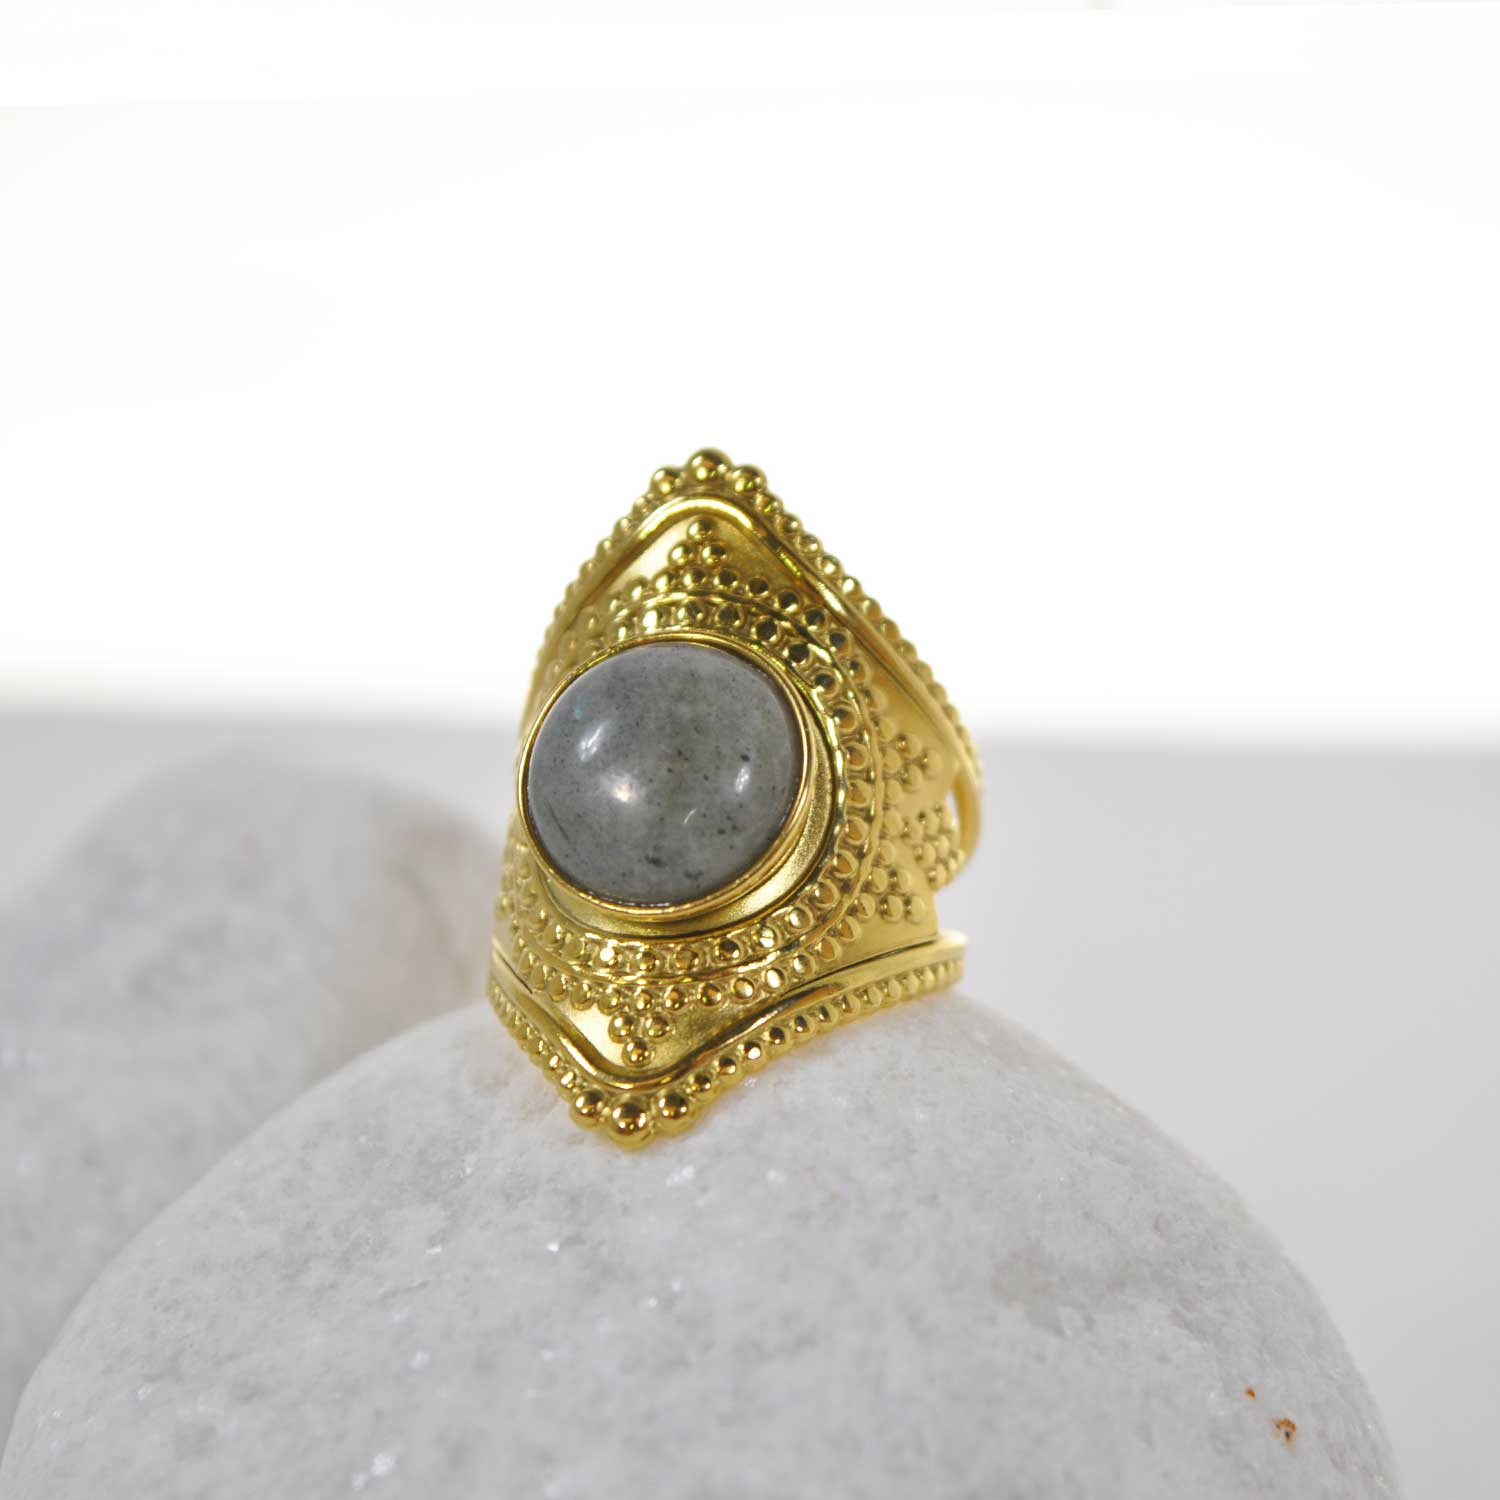 Gray stone ring